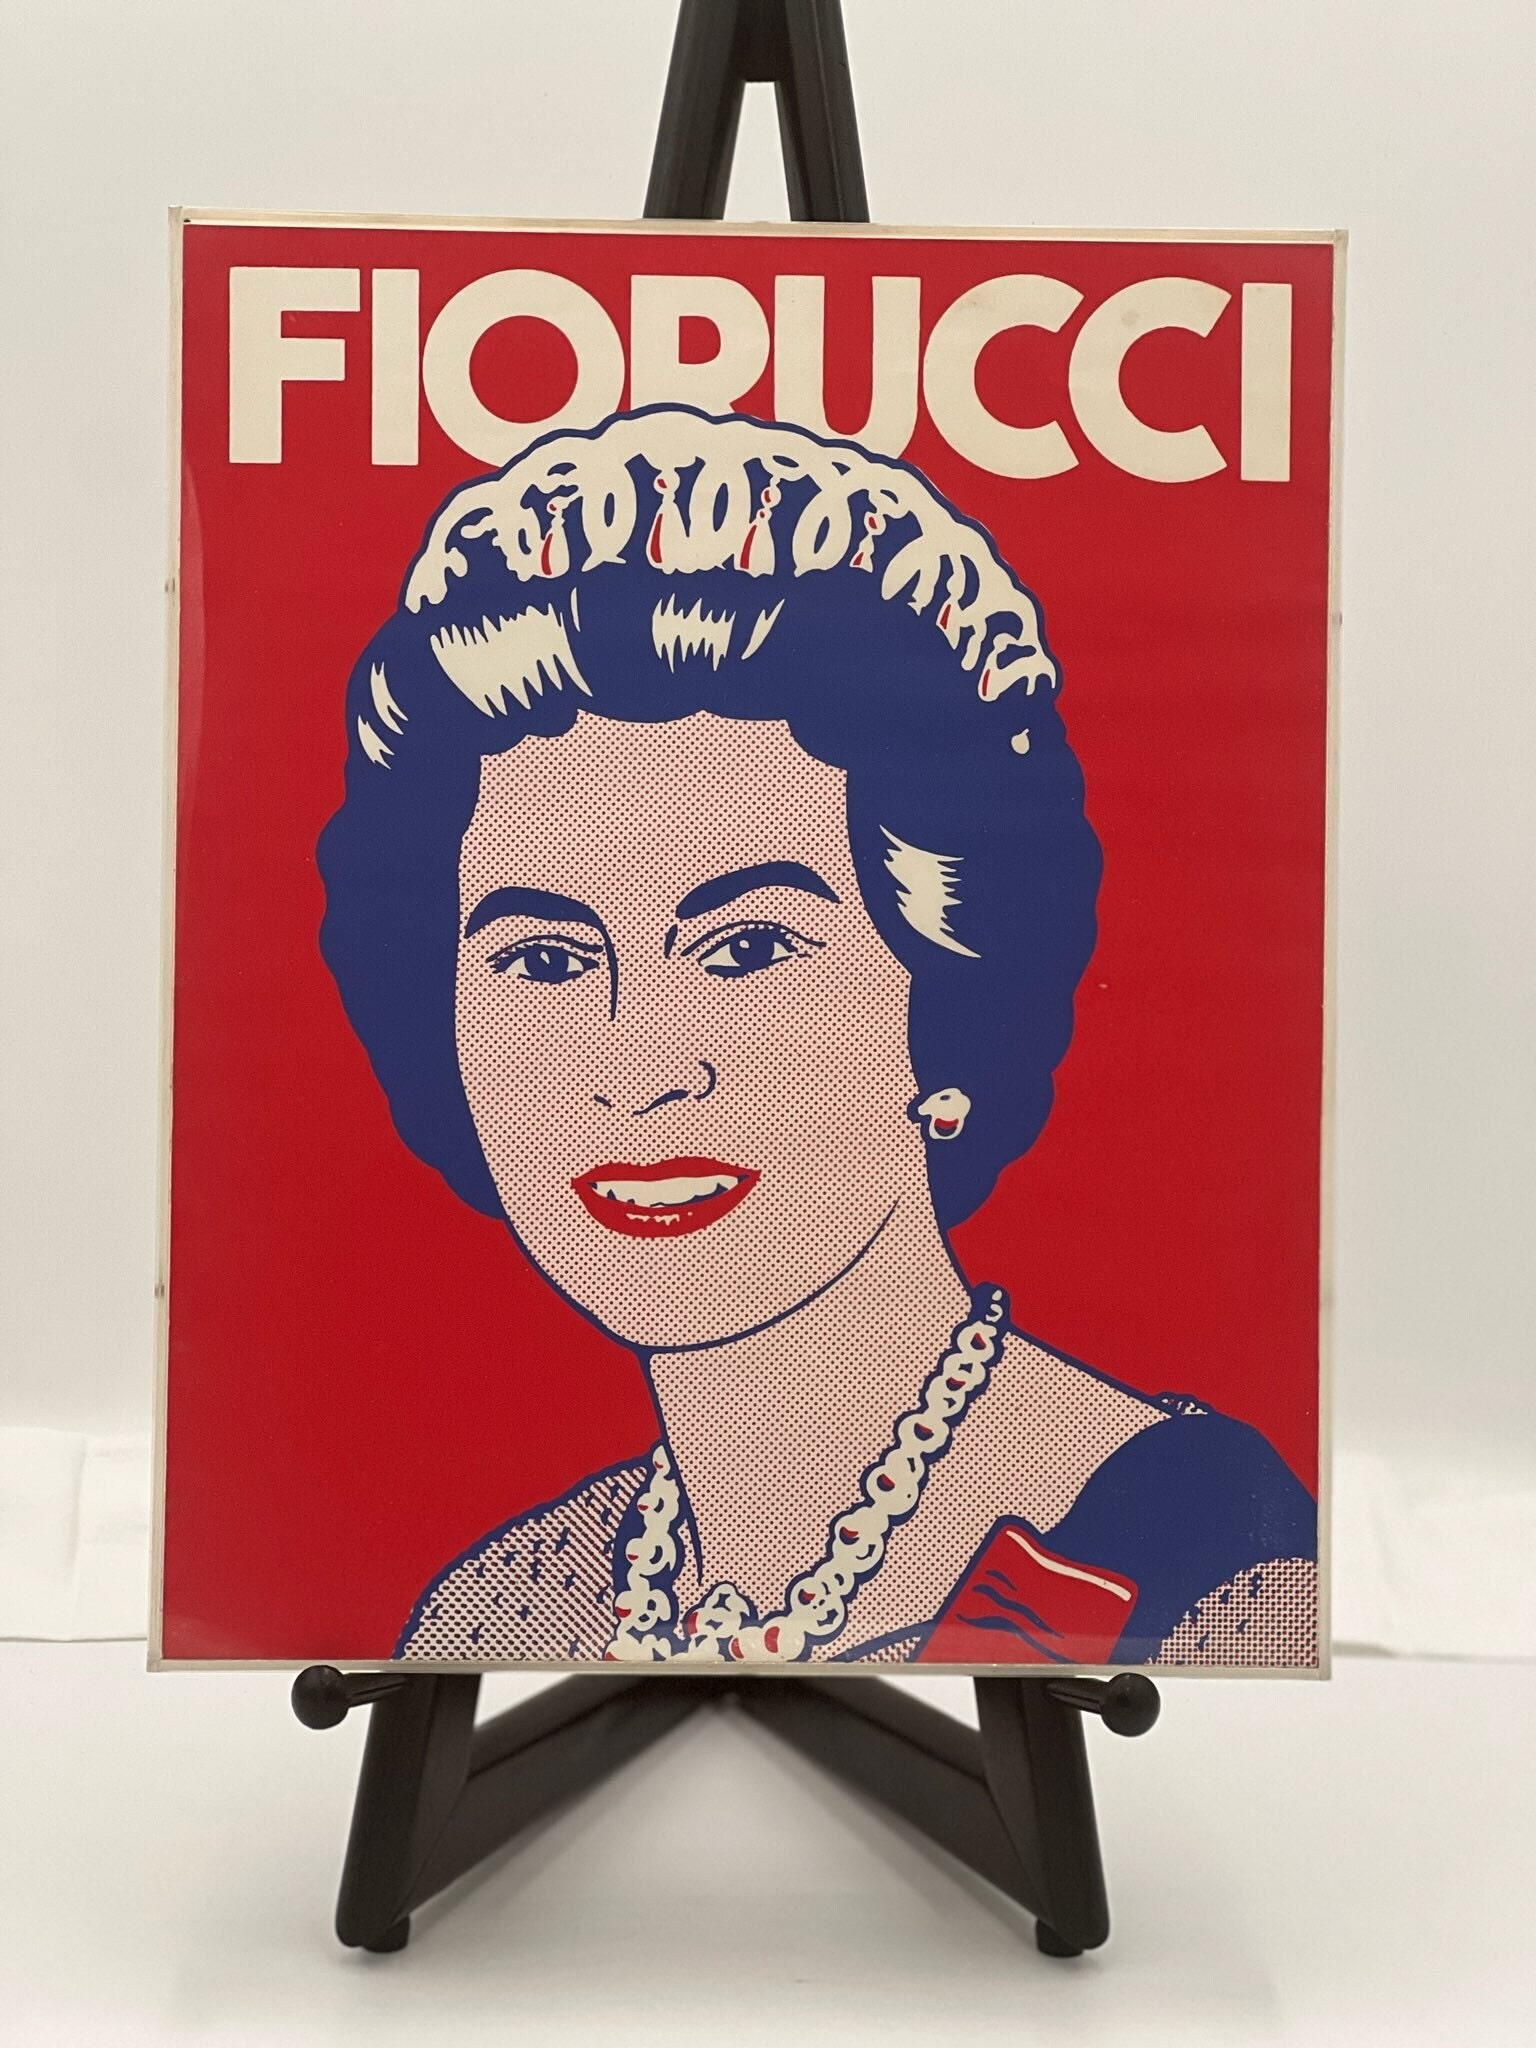 Vintage 1980's Fiorucci New Wave Italian Fashion Post Modern